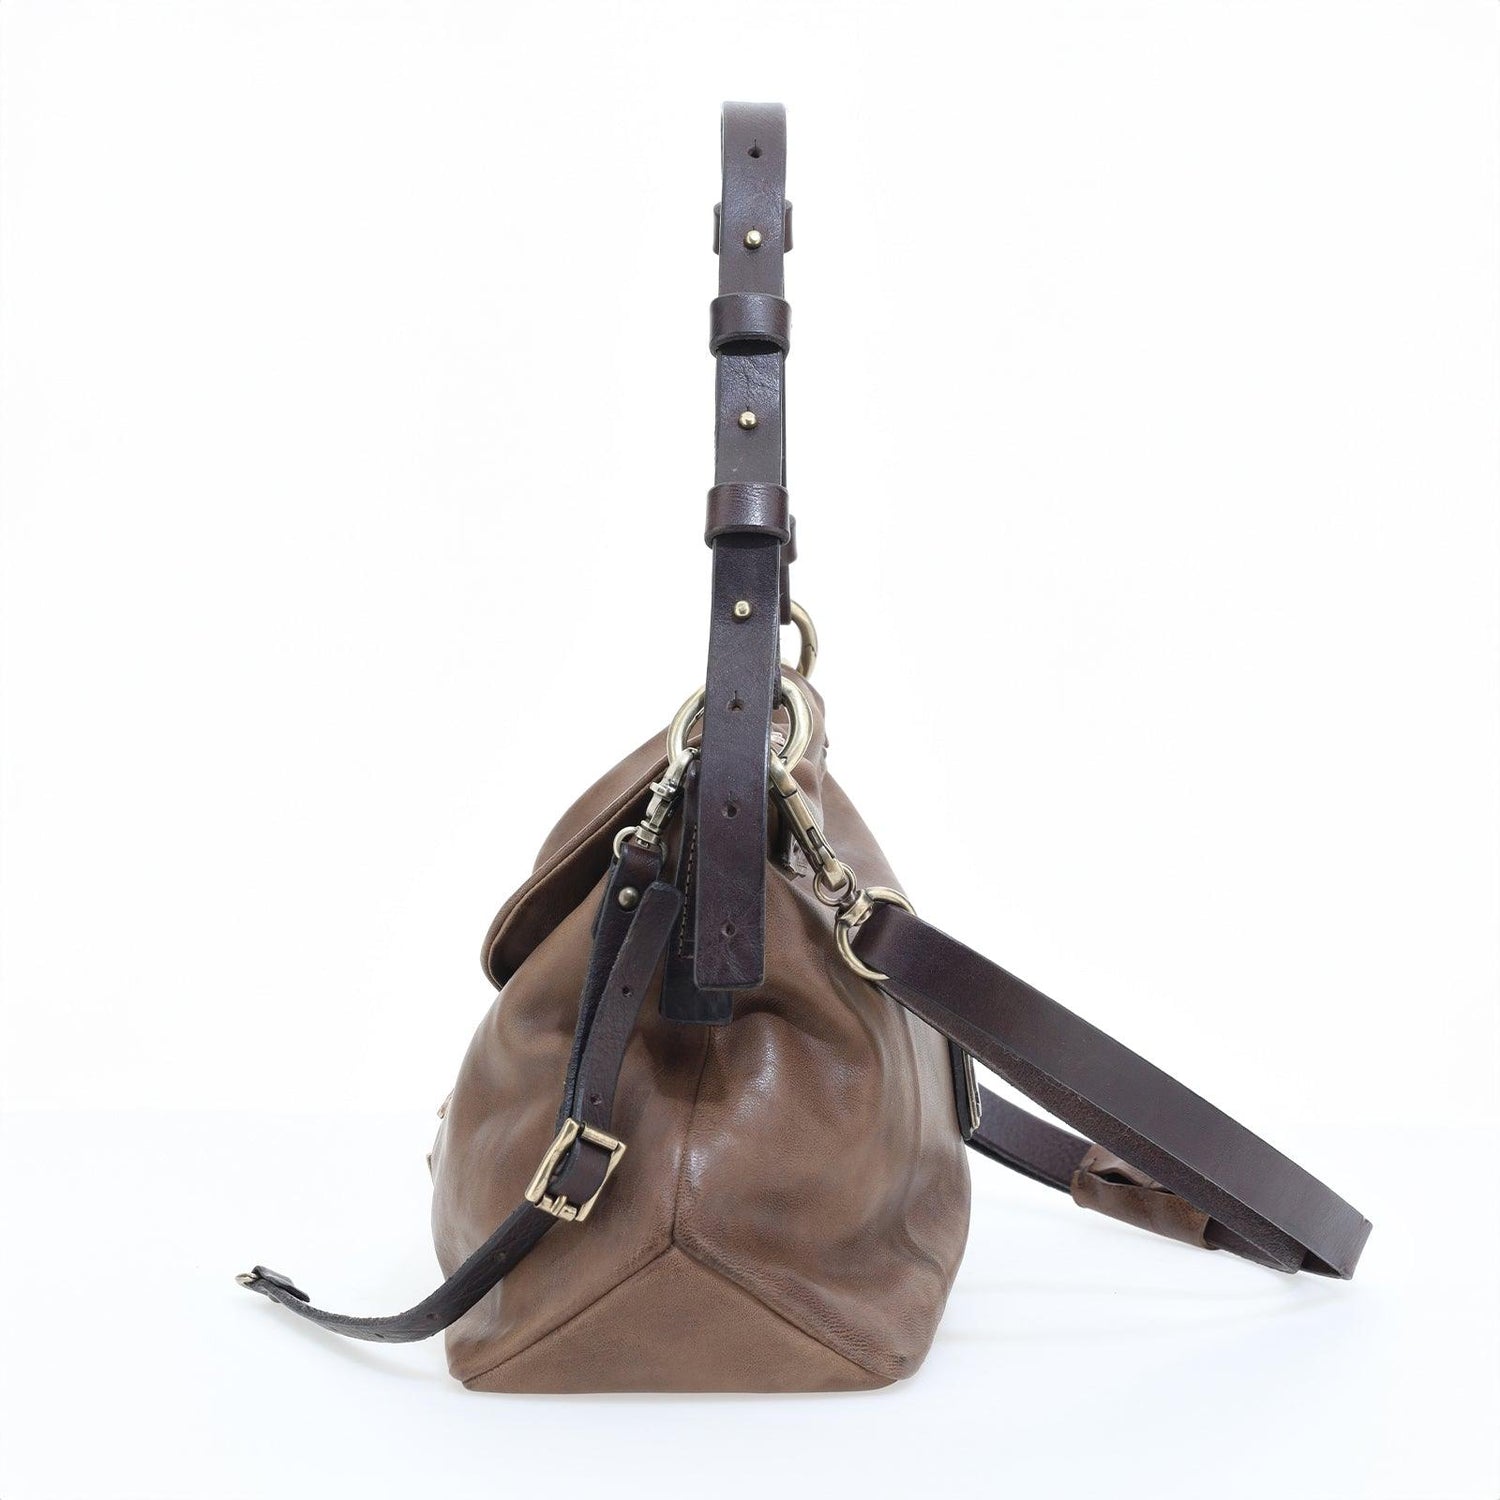 Lory - A.S. 98 - Handbags